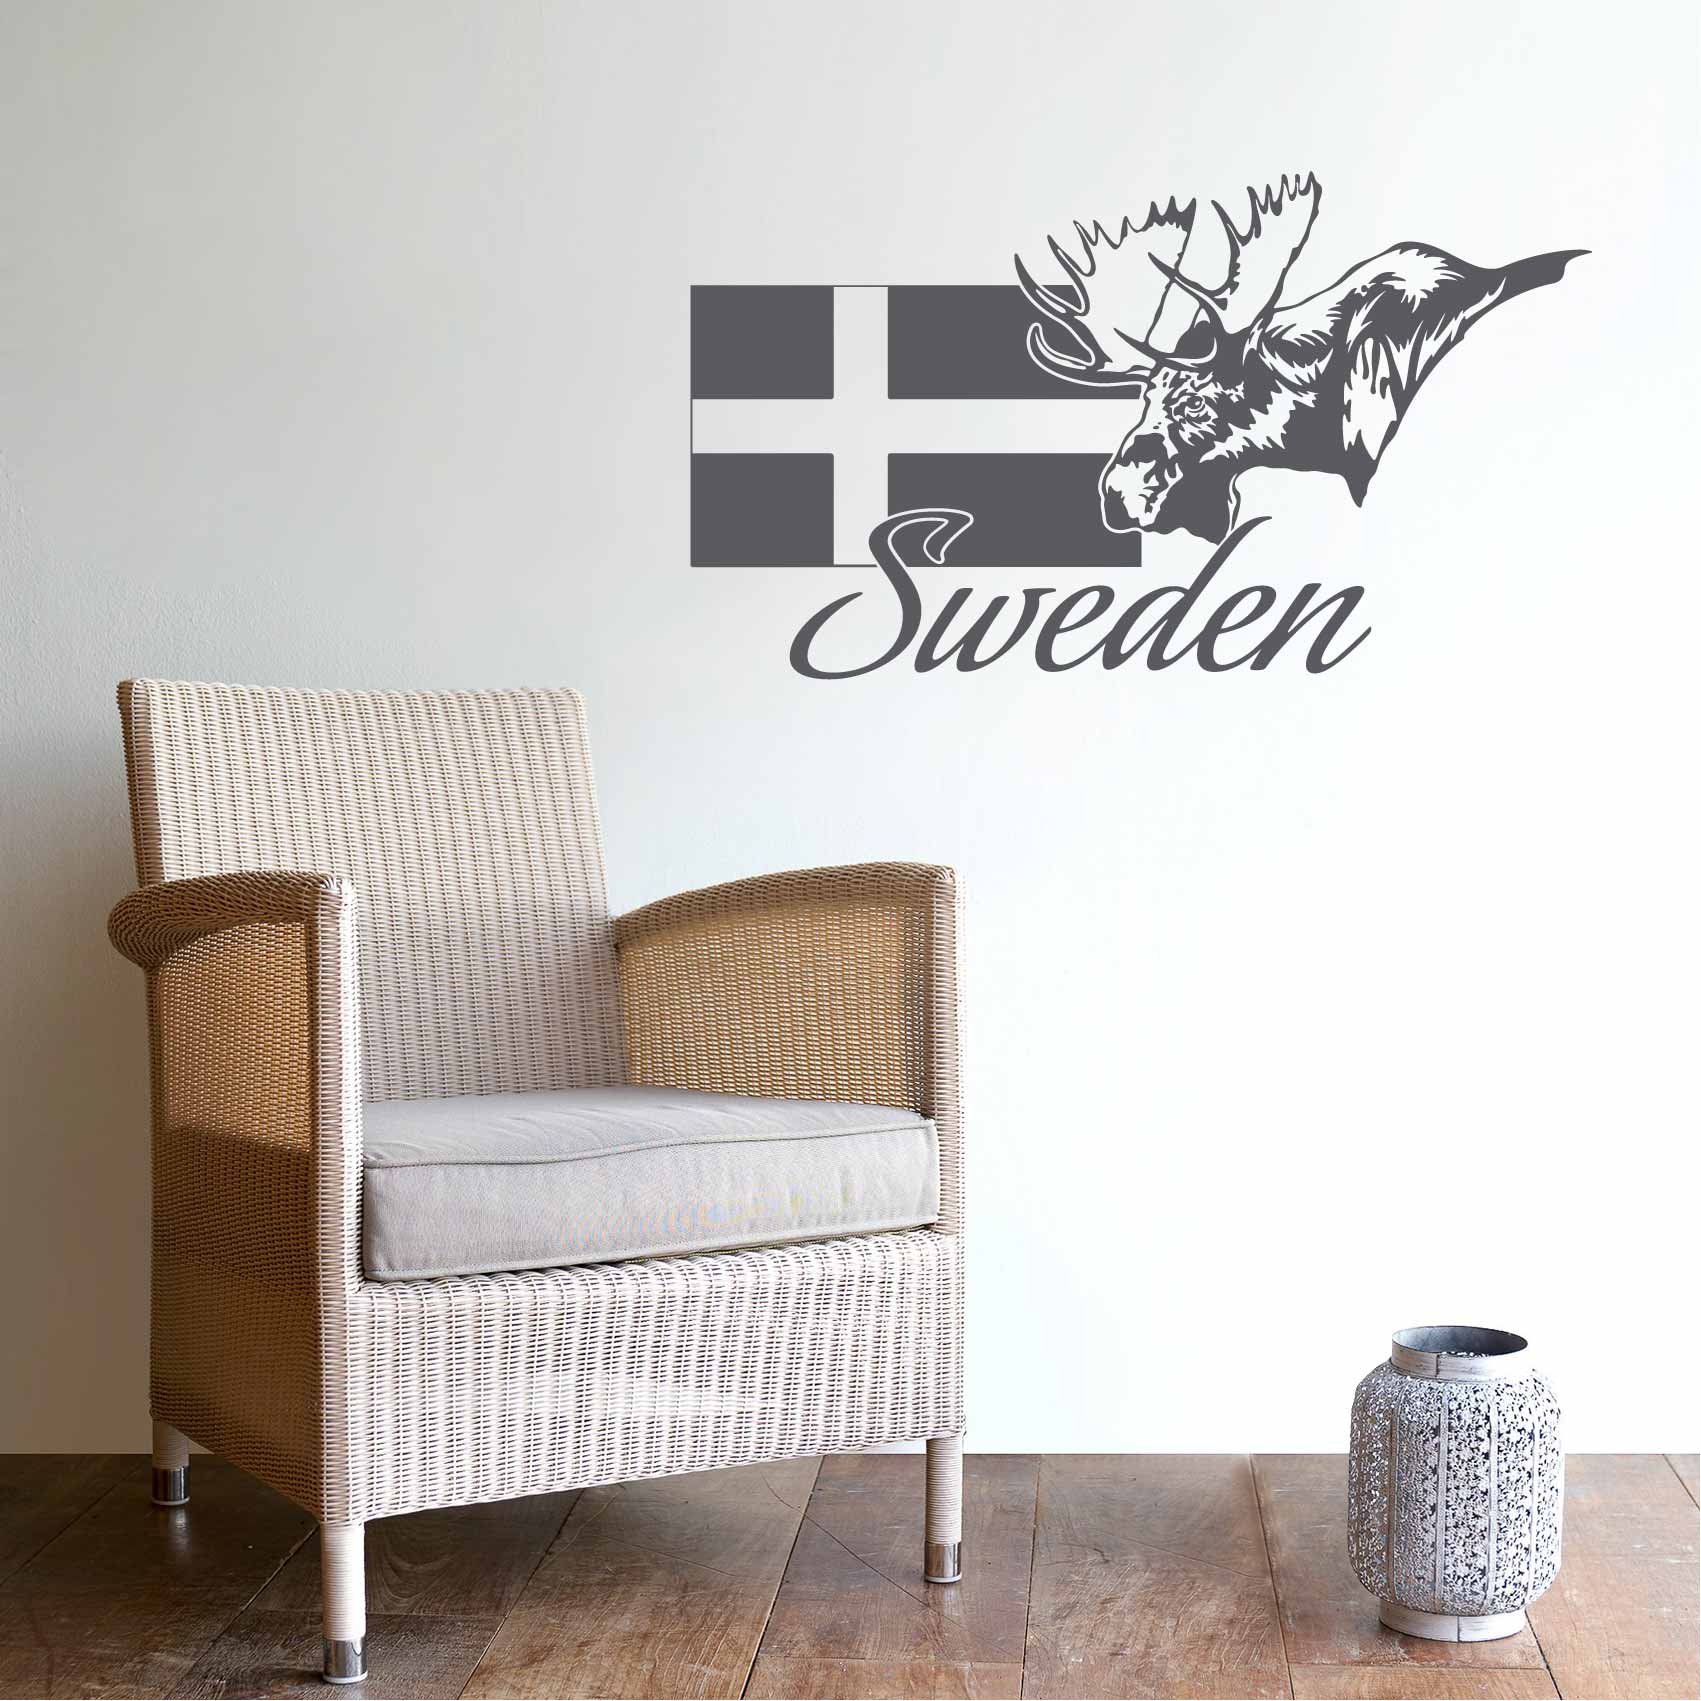 stickers-suede-ref23pays-stickers-muraux-suede-carte-autocollant-deco-chambre-salon-sticker-mural-sweden-voyage